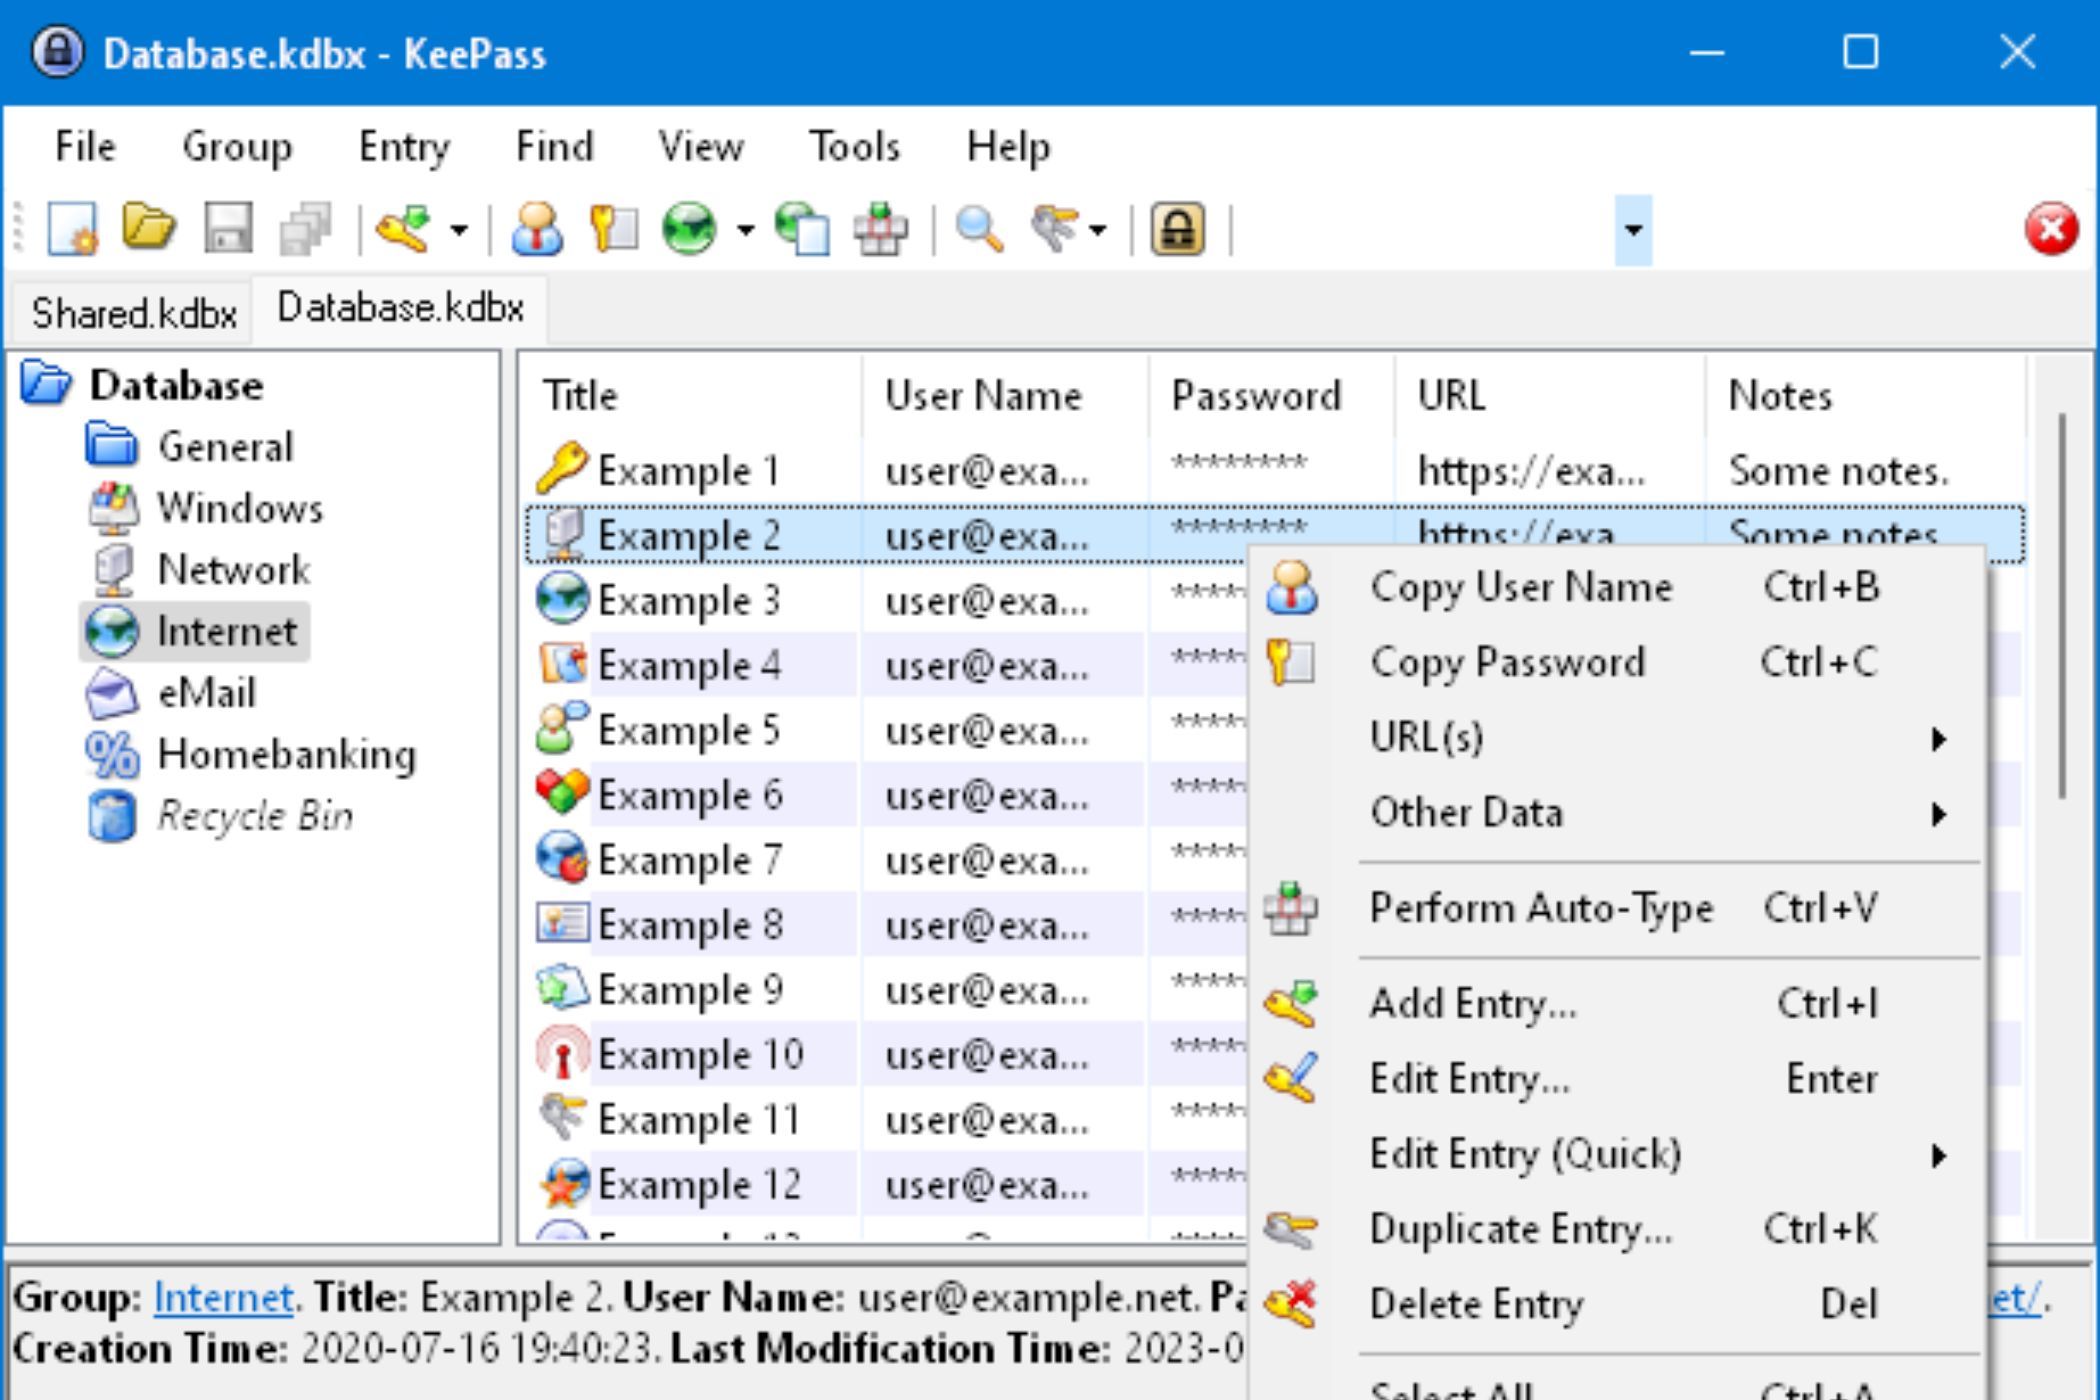 A screenshot showing the desktop app interface of the KeePass password manager.